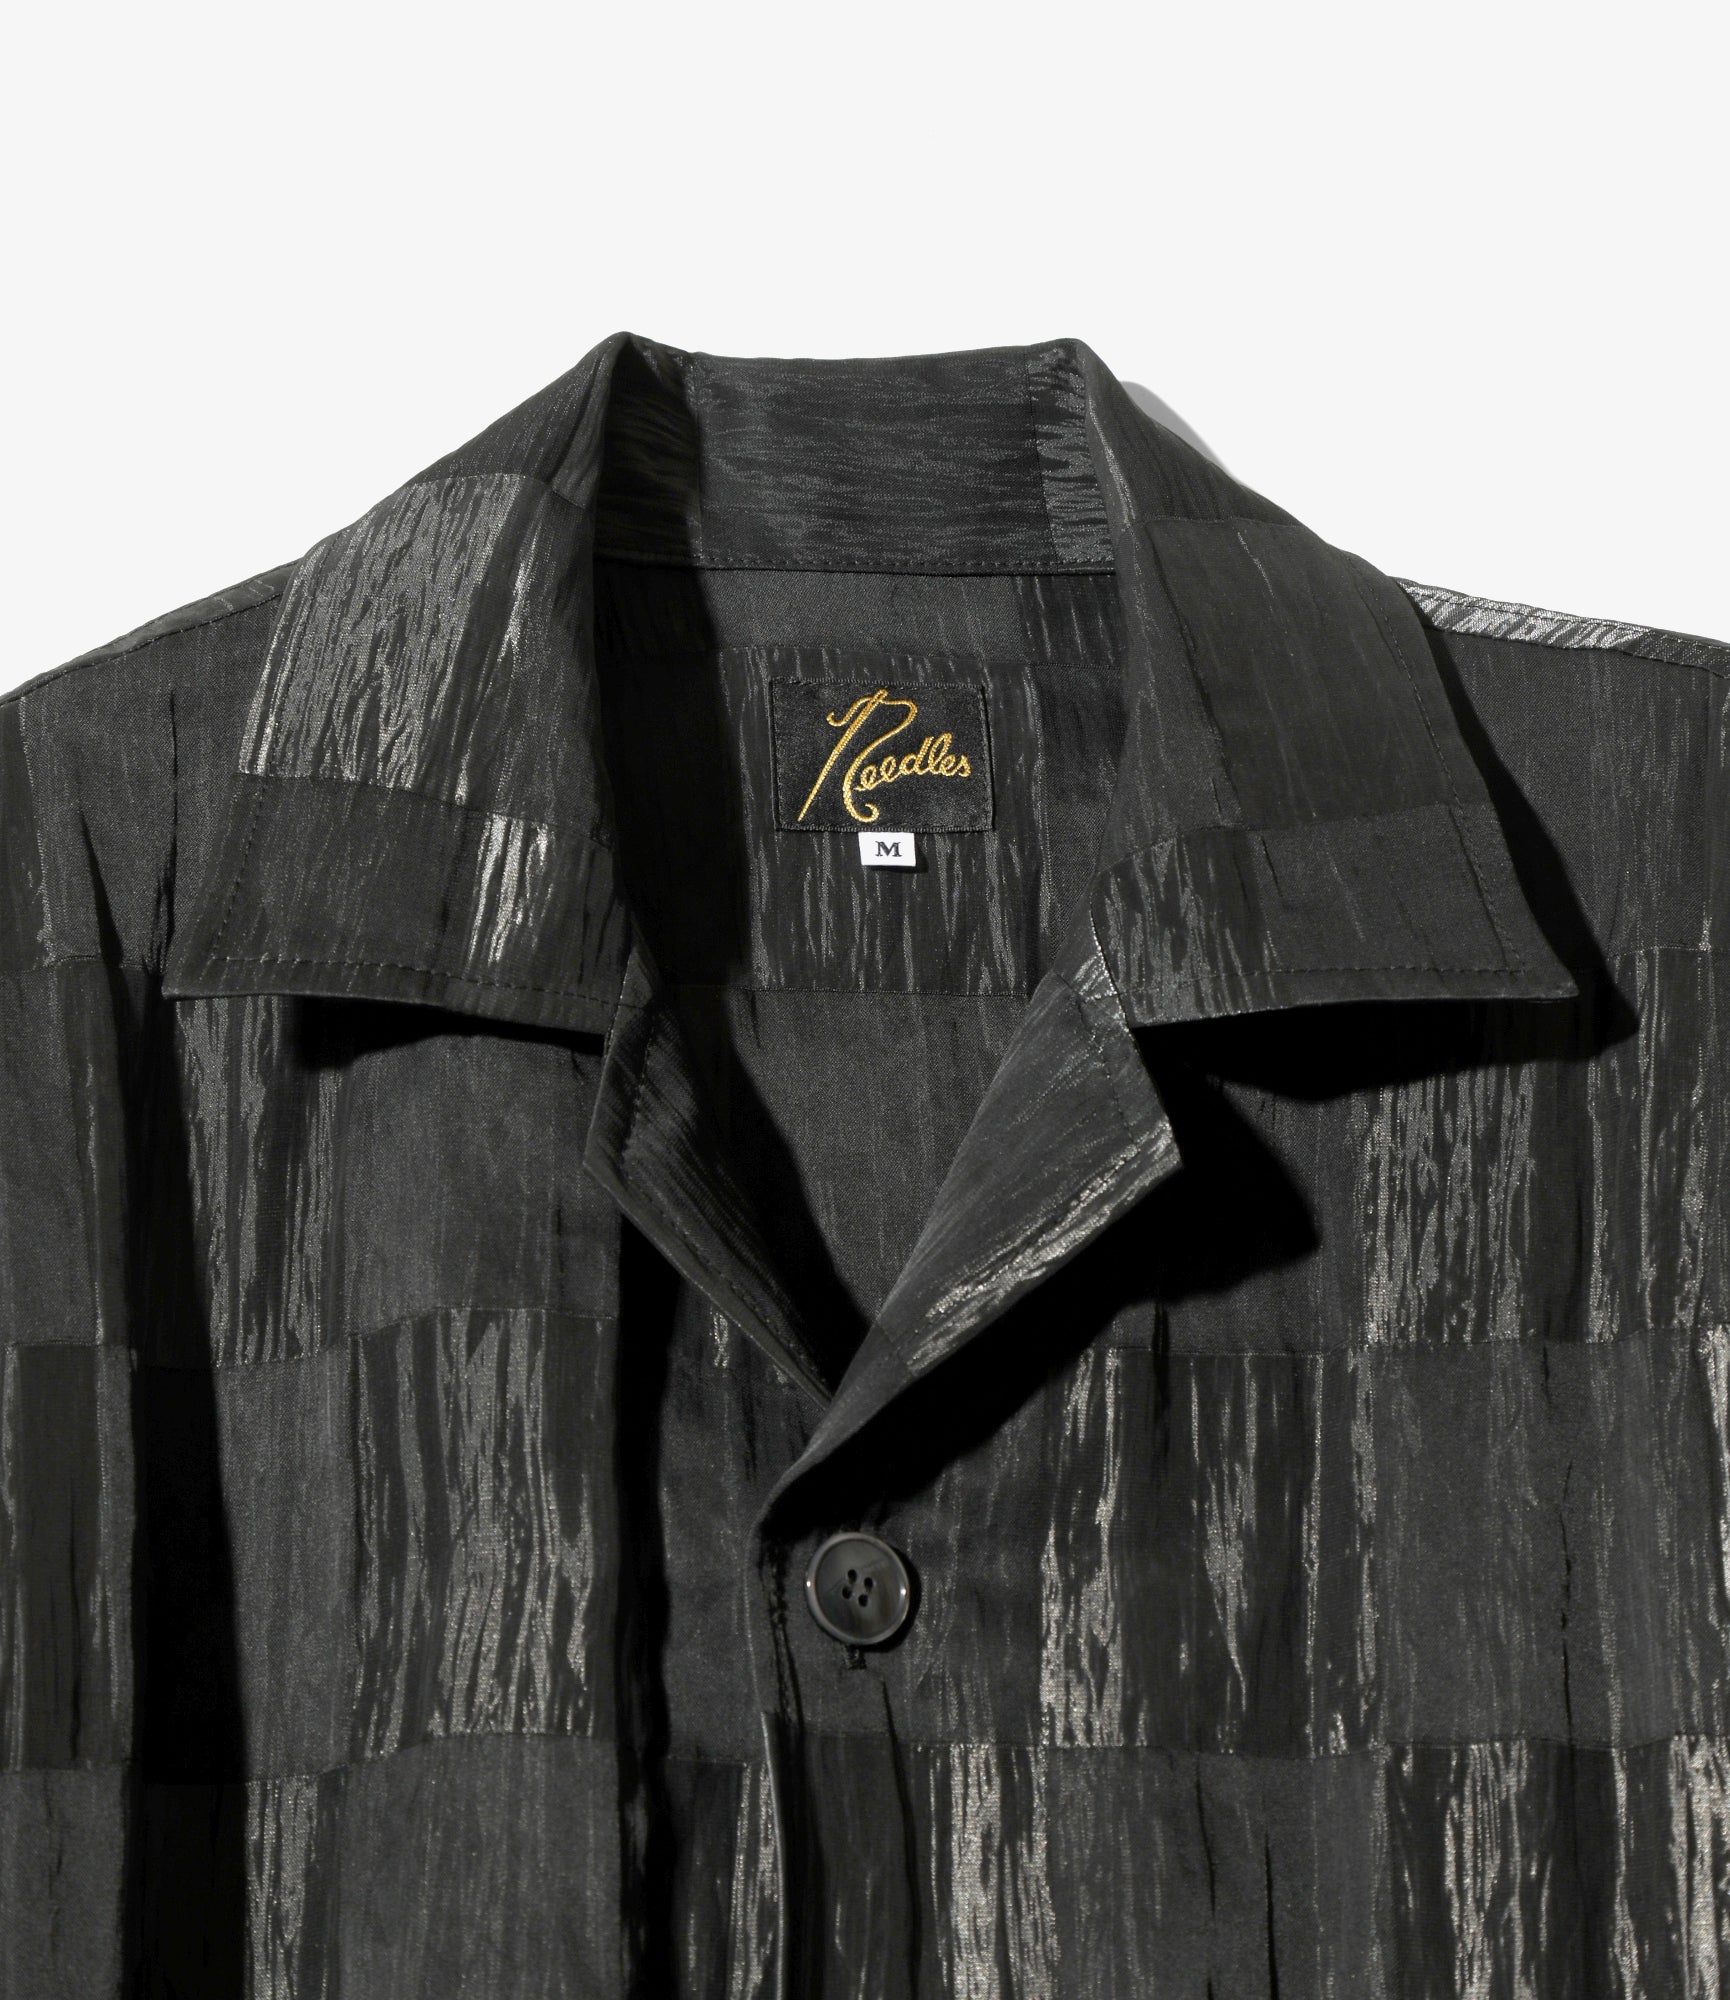 Needles Cabana Shirt - R/N Bright Cloth / Checker – Black